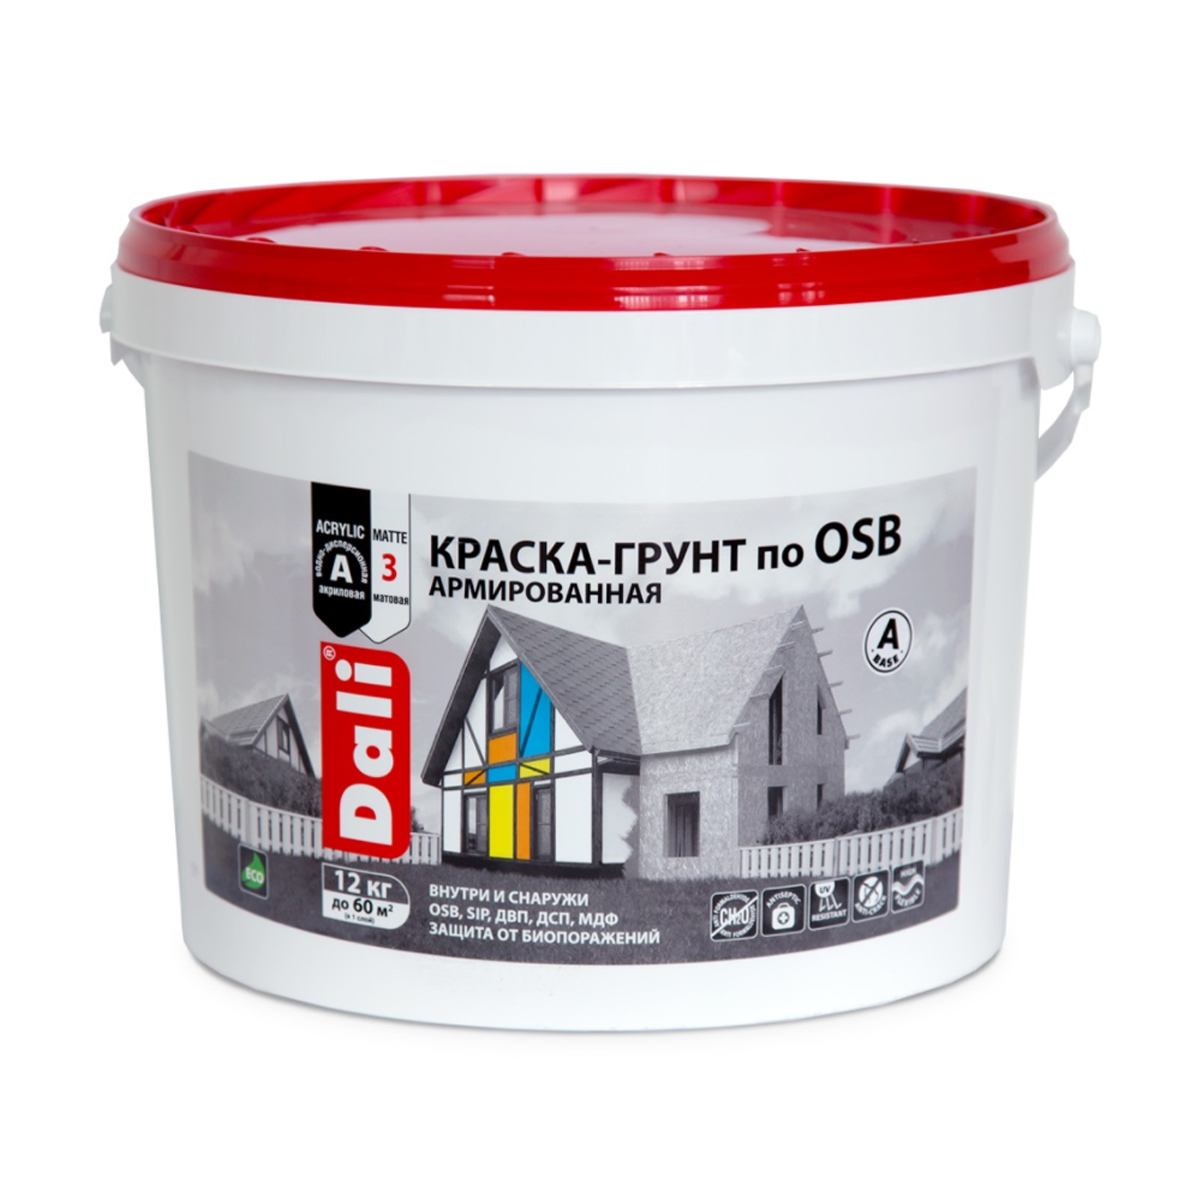 Краска-грунт по OSB Dali, армированная, матовая, база A, белая, 12 кг грунт для плит osb neomid 7 кг